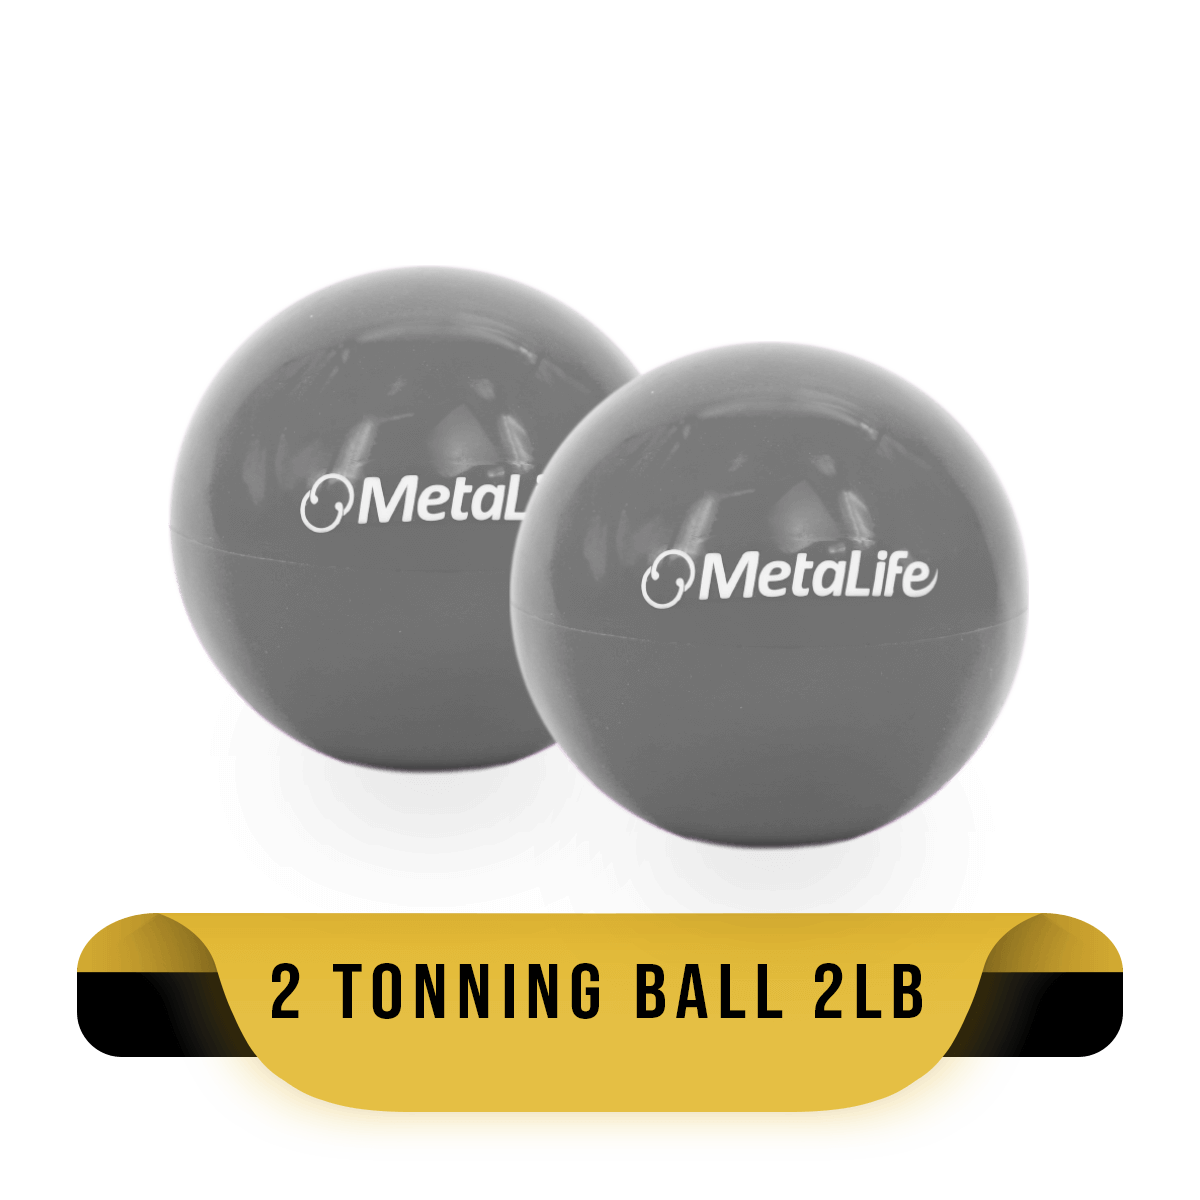 Tonning Ball 2lb